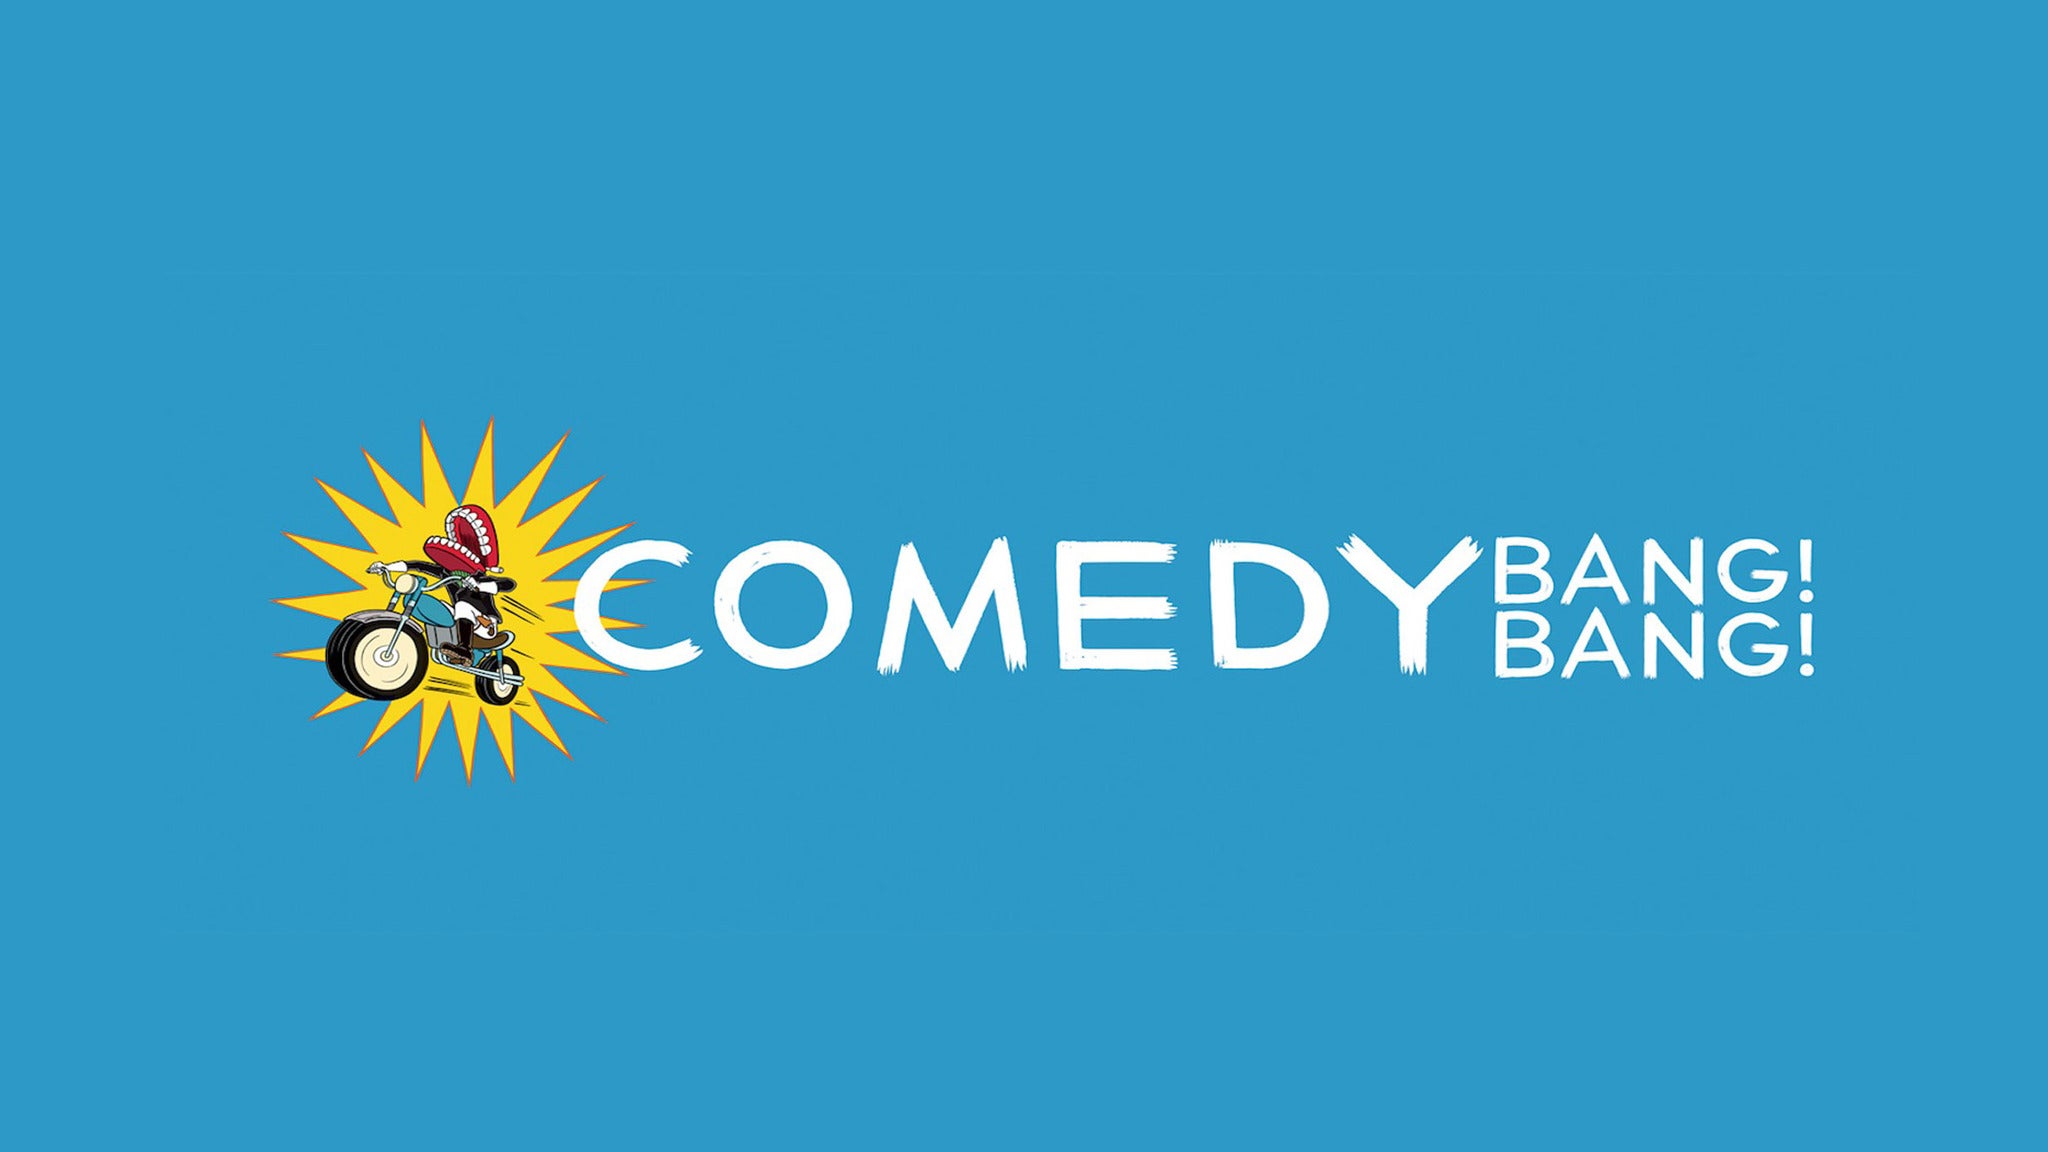 Comedy Bang! Bang! Live! in Royal Oak promo photo for Artist presale offer code